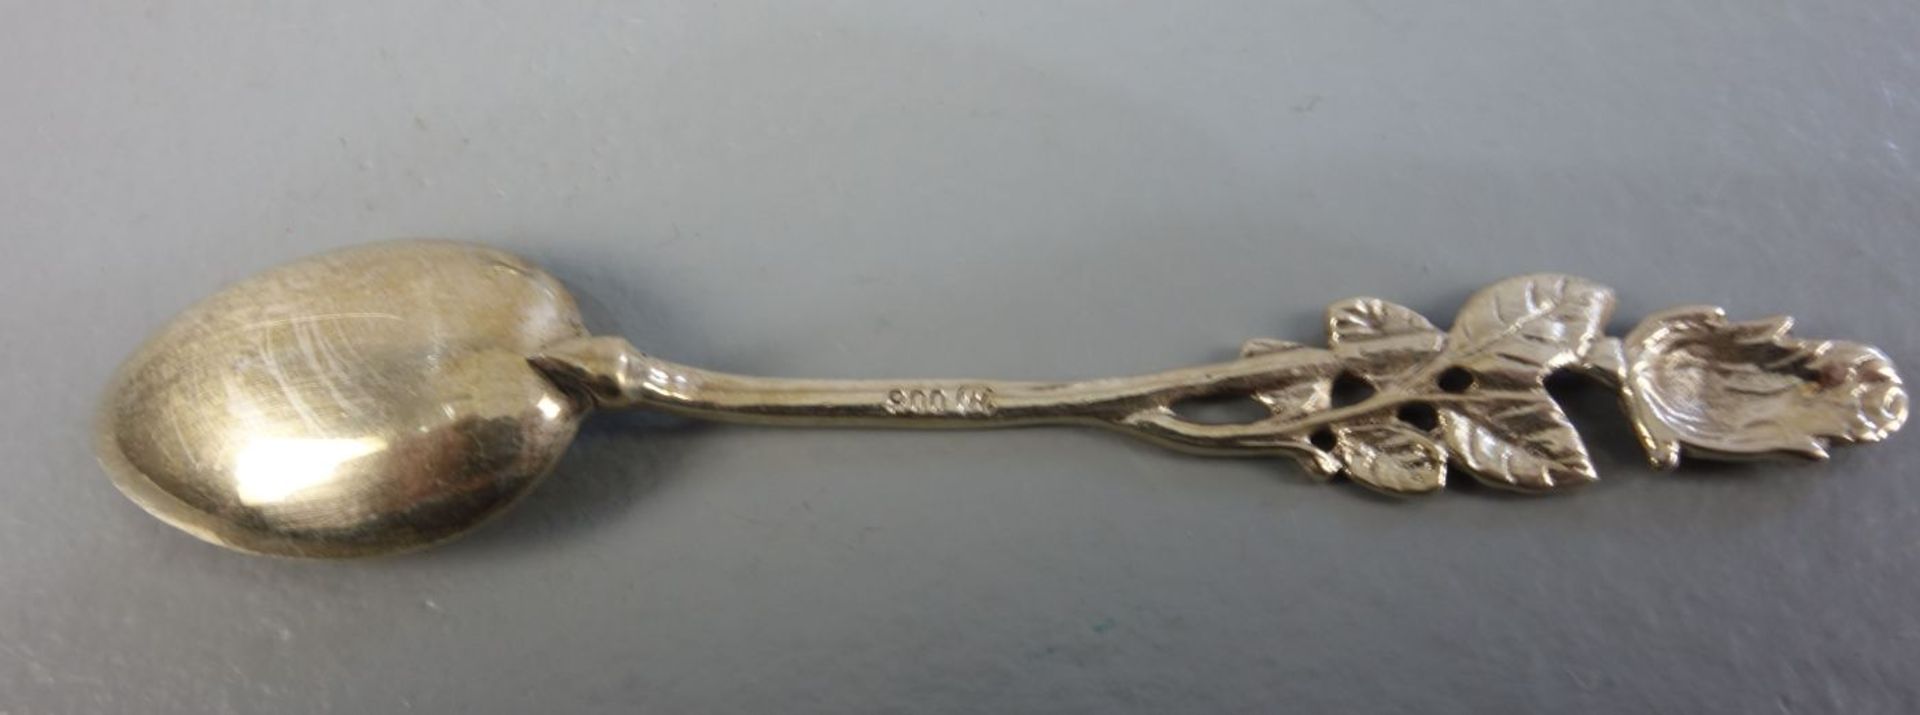 KONVOLUT VORLEGEBESTECK - 3 TEILE / silver serving cutlery - small spoon, sugar tong, serving spoon. - Bild 3 aus 3